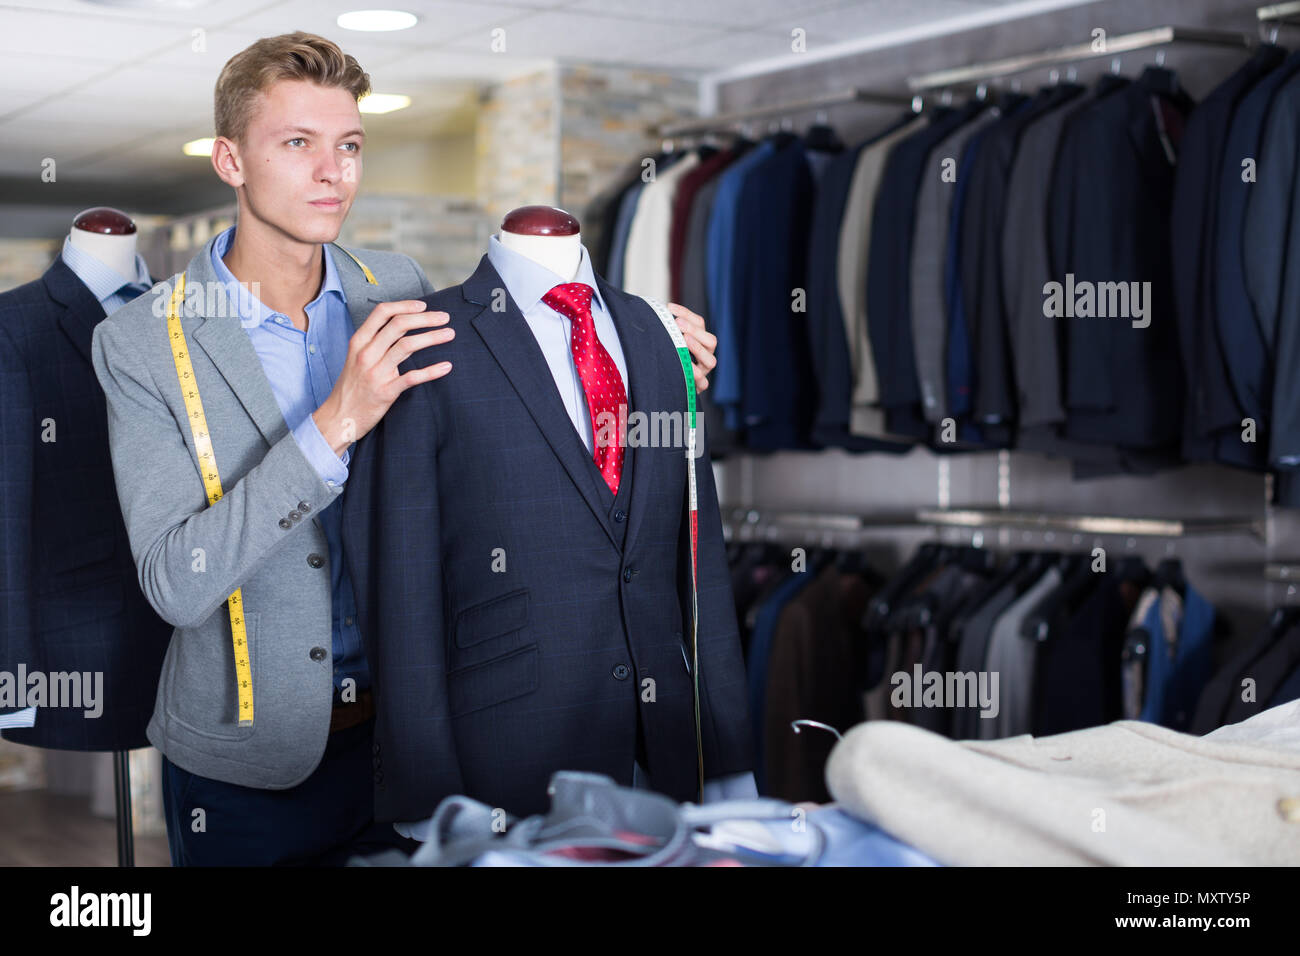 Verkäufer im Geschäft Kleidung messen Jacke im Dress Shop Stockfotografie -  Alamy